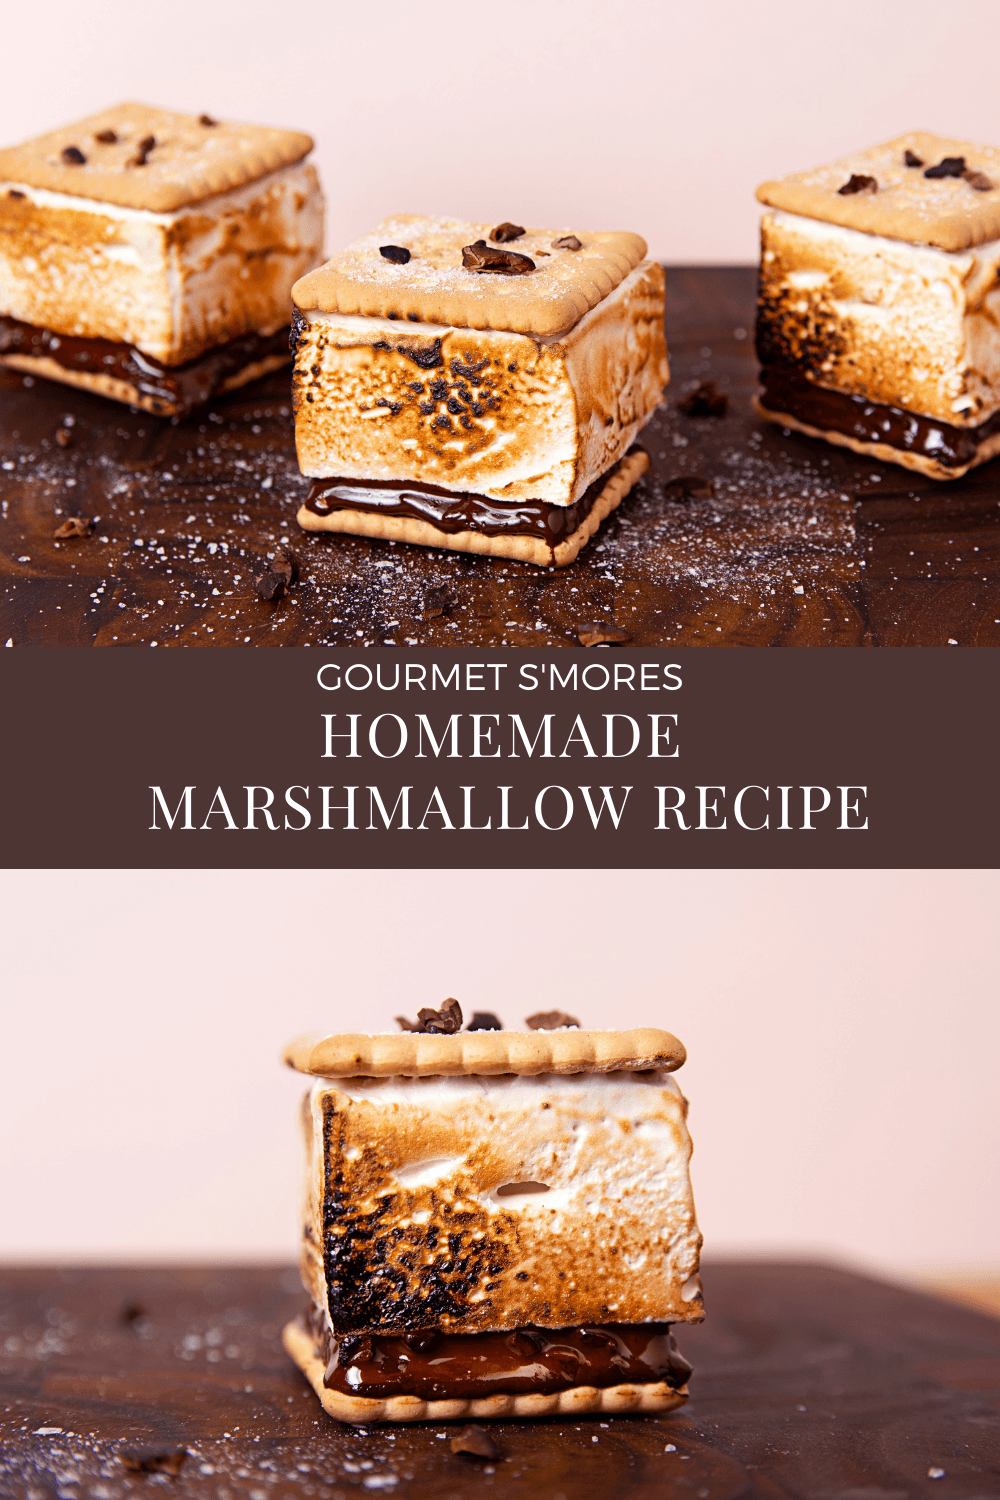 Homemade Marshmallow Recipe for Gourmet S'mores recipe